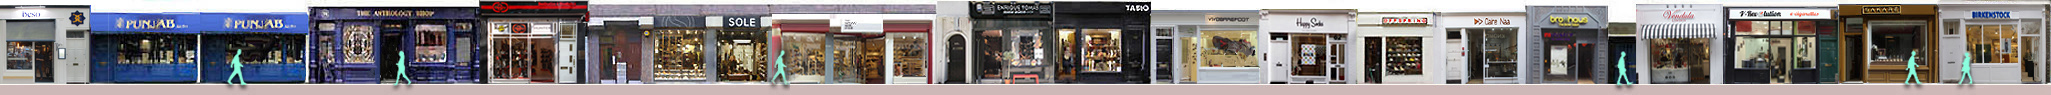 Shops and restaurants on Neal Street: Astrology shop, Sole, Vivobarefoot, Offspring, Vendula, Birkenstock